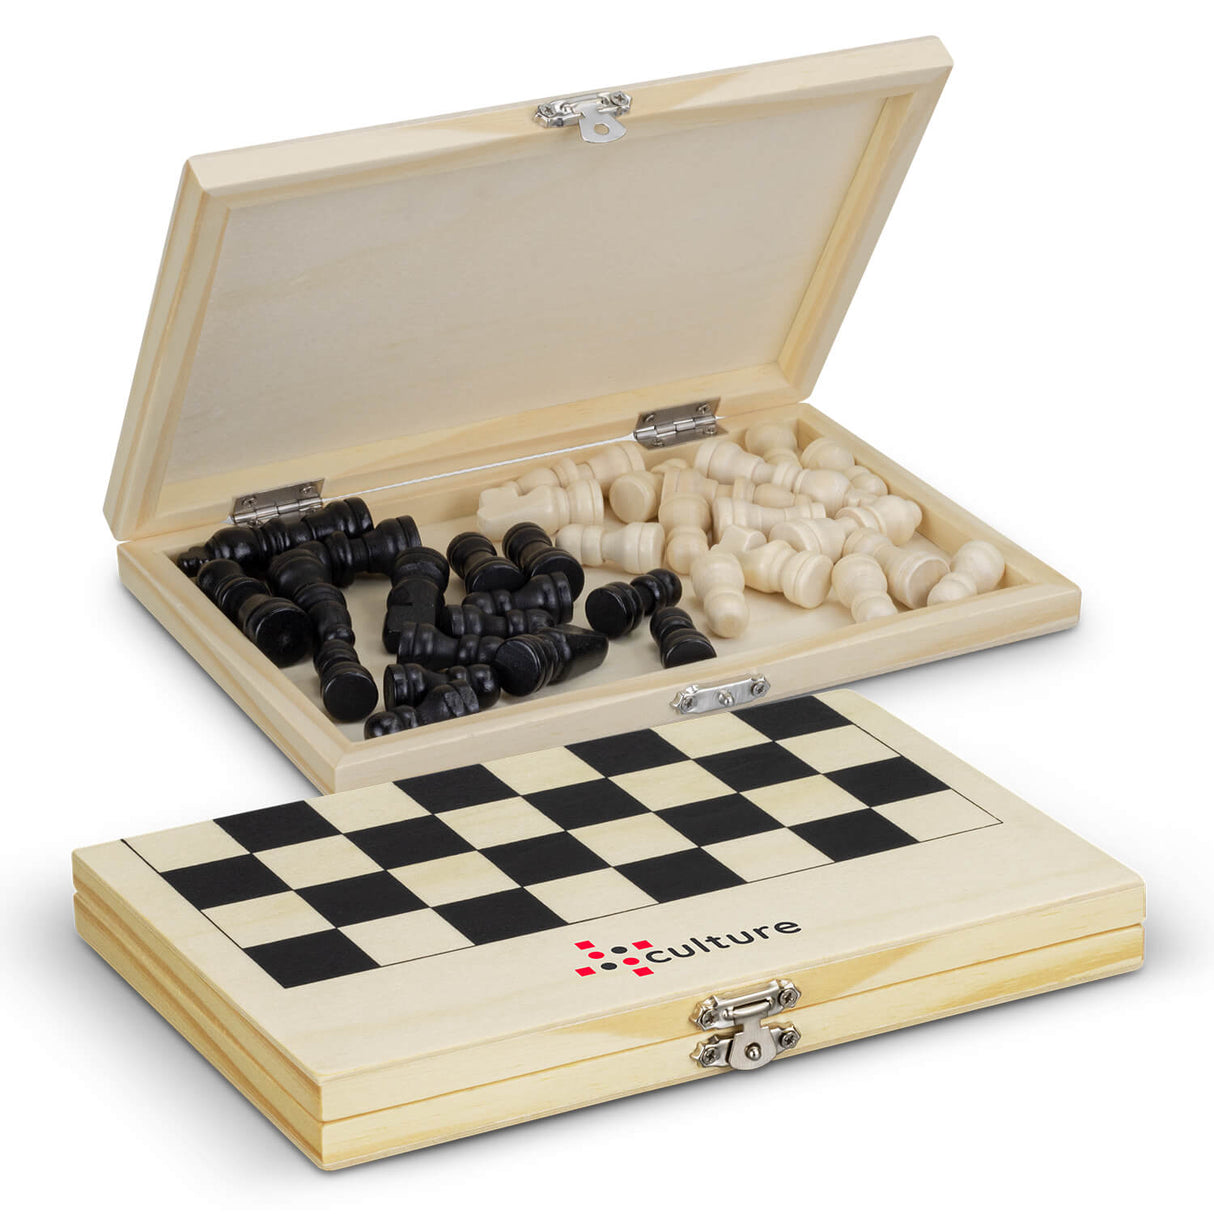 Travel Chess Set - Printed